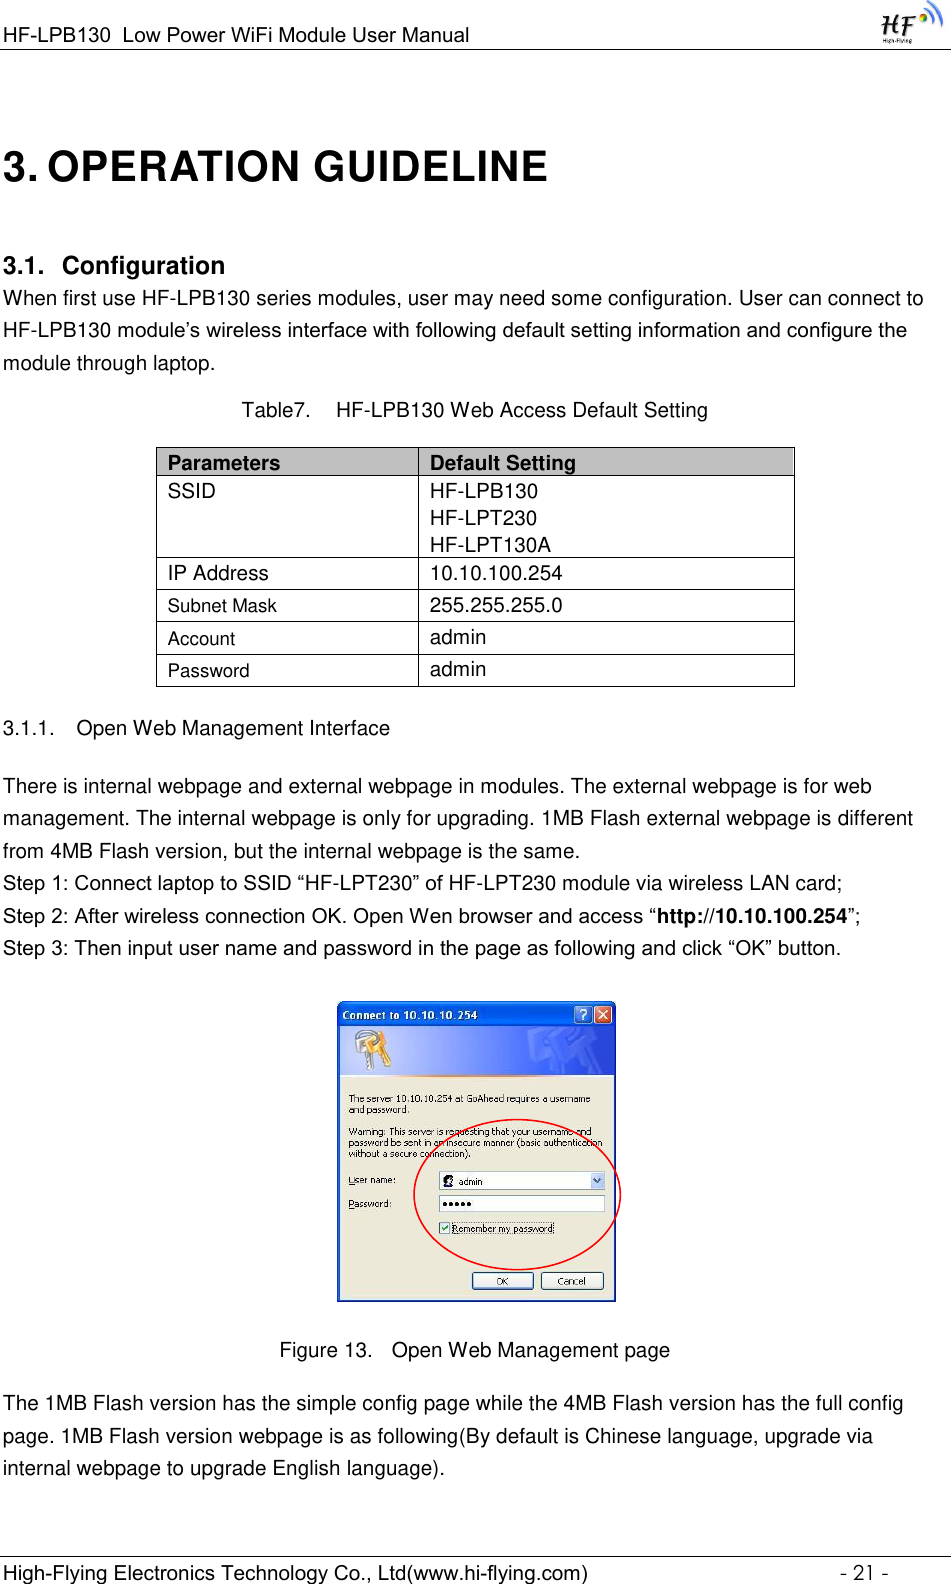 Page 21 of High Flying Electronics Technology HF-LPB130 Wi-Fi Module User Manual GPON SFU System Design